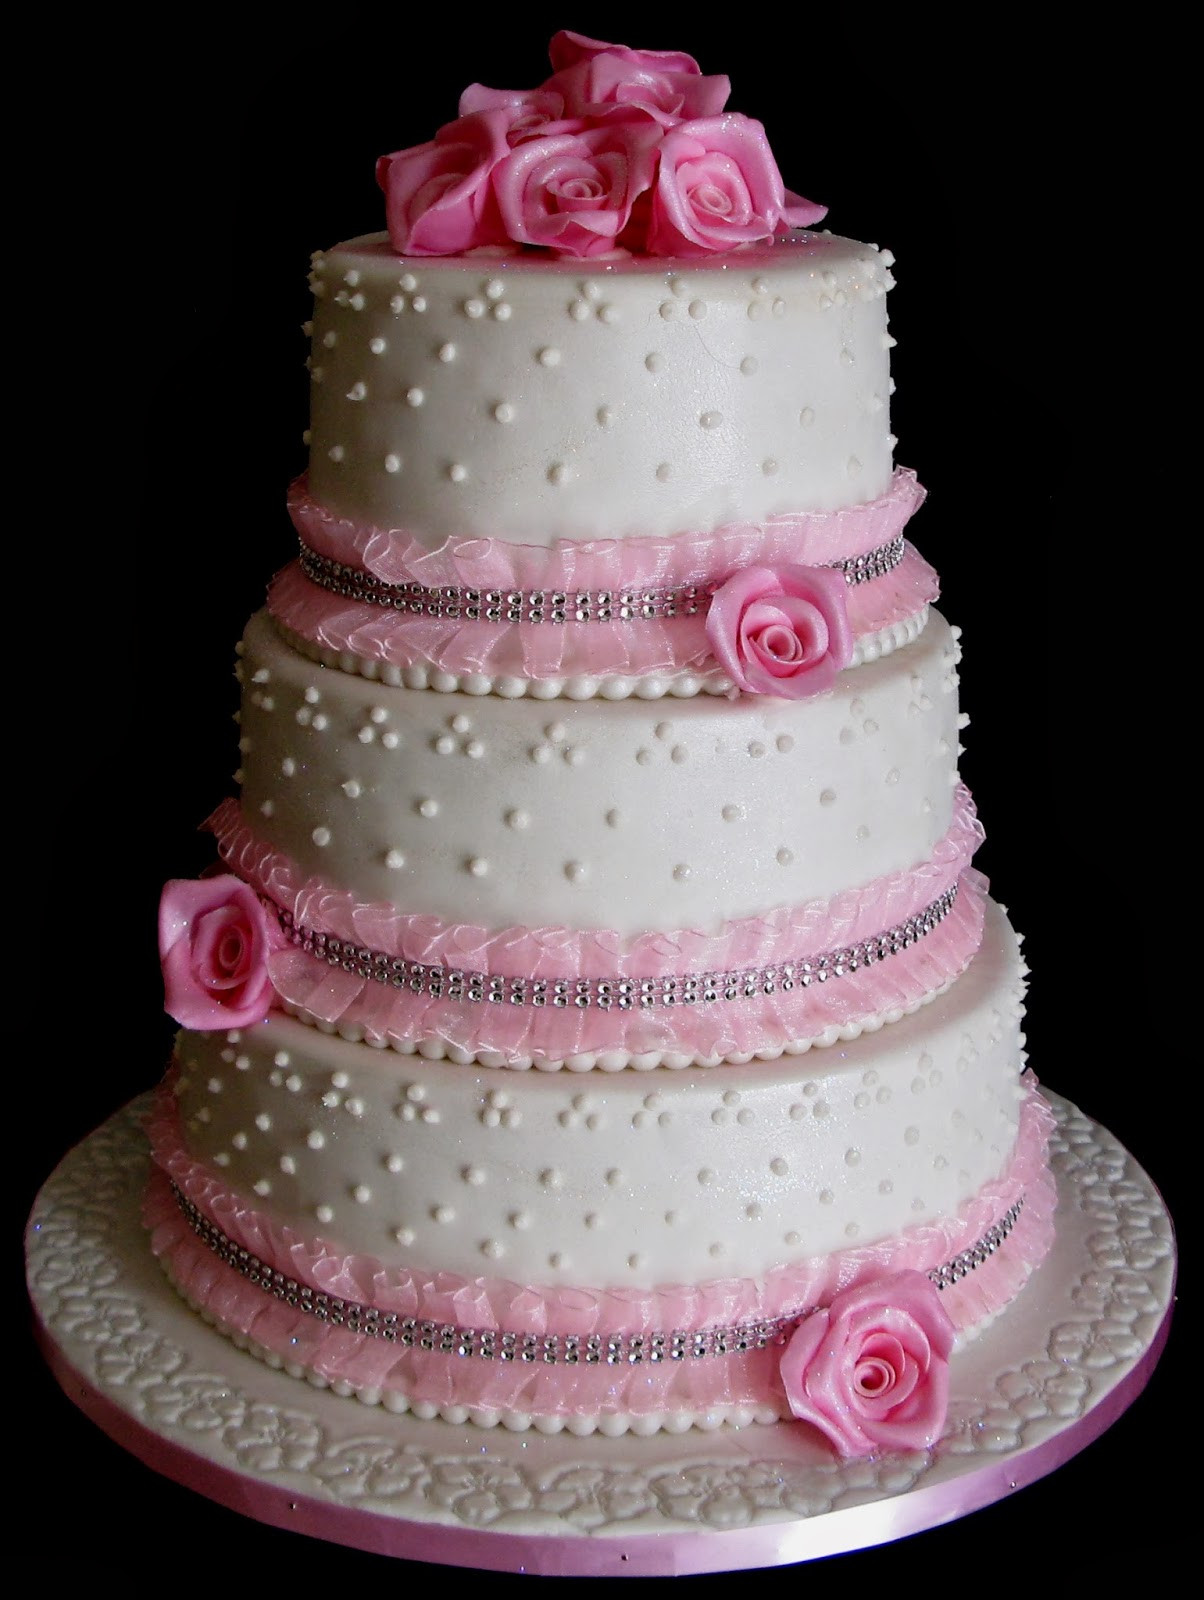 3 Layers Wedding Cakes
 Sugarcraft by Soni Three Layer Wedding Cake Pink Roses